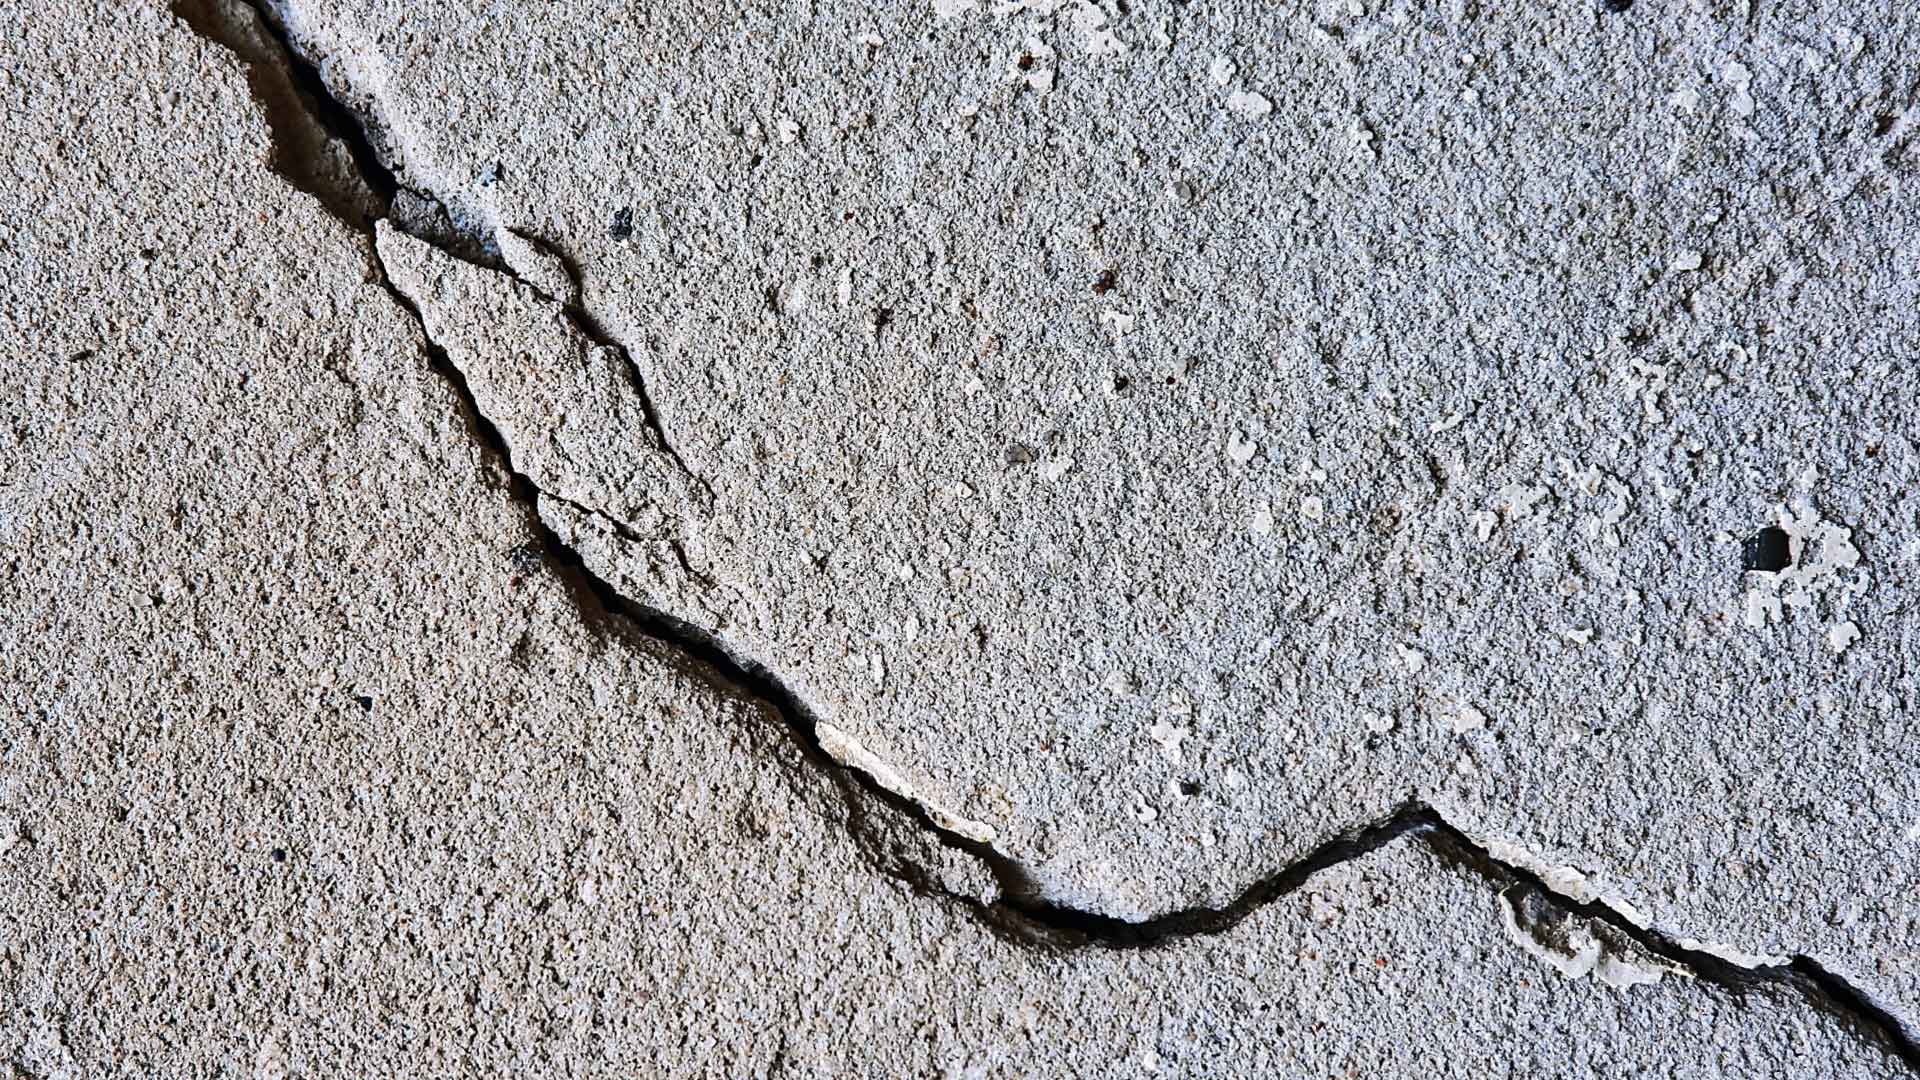 Crack in the sidewalk